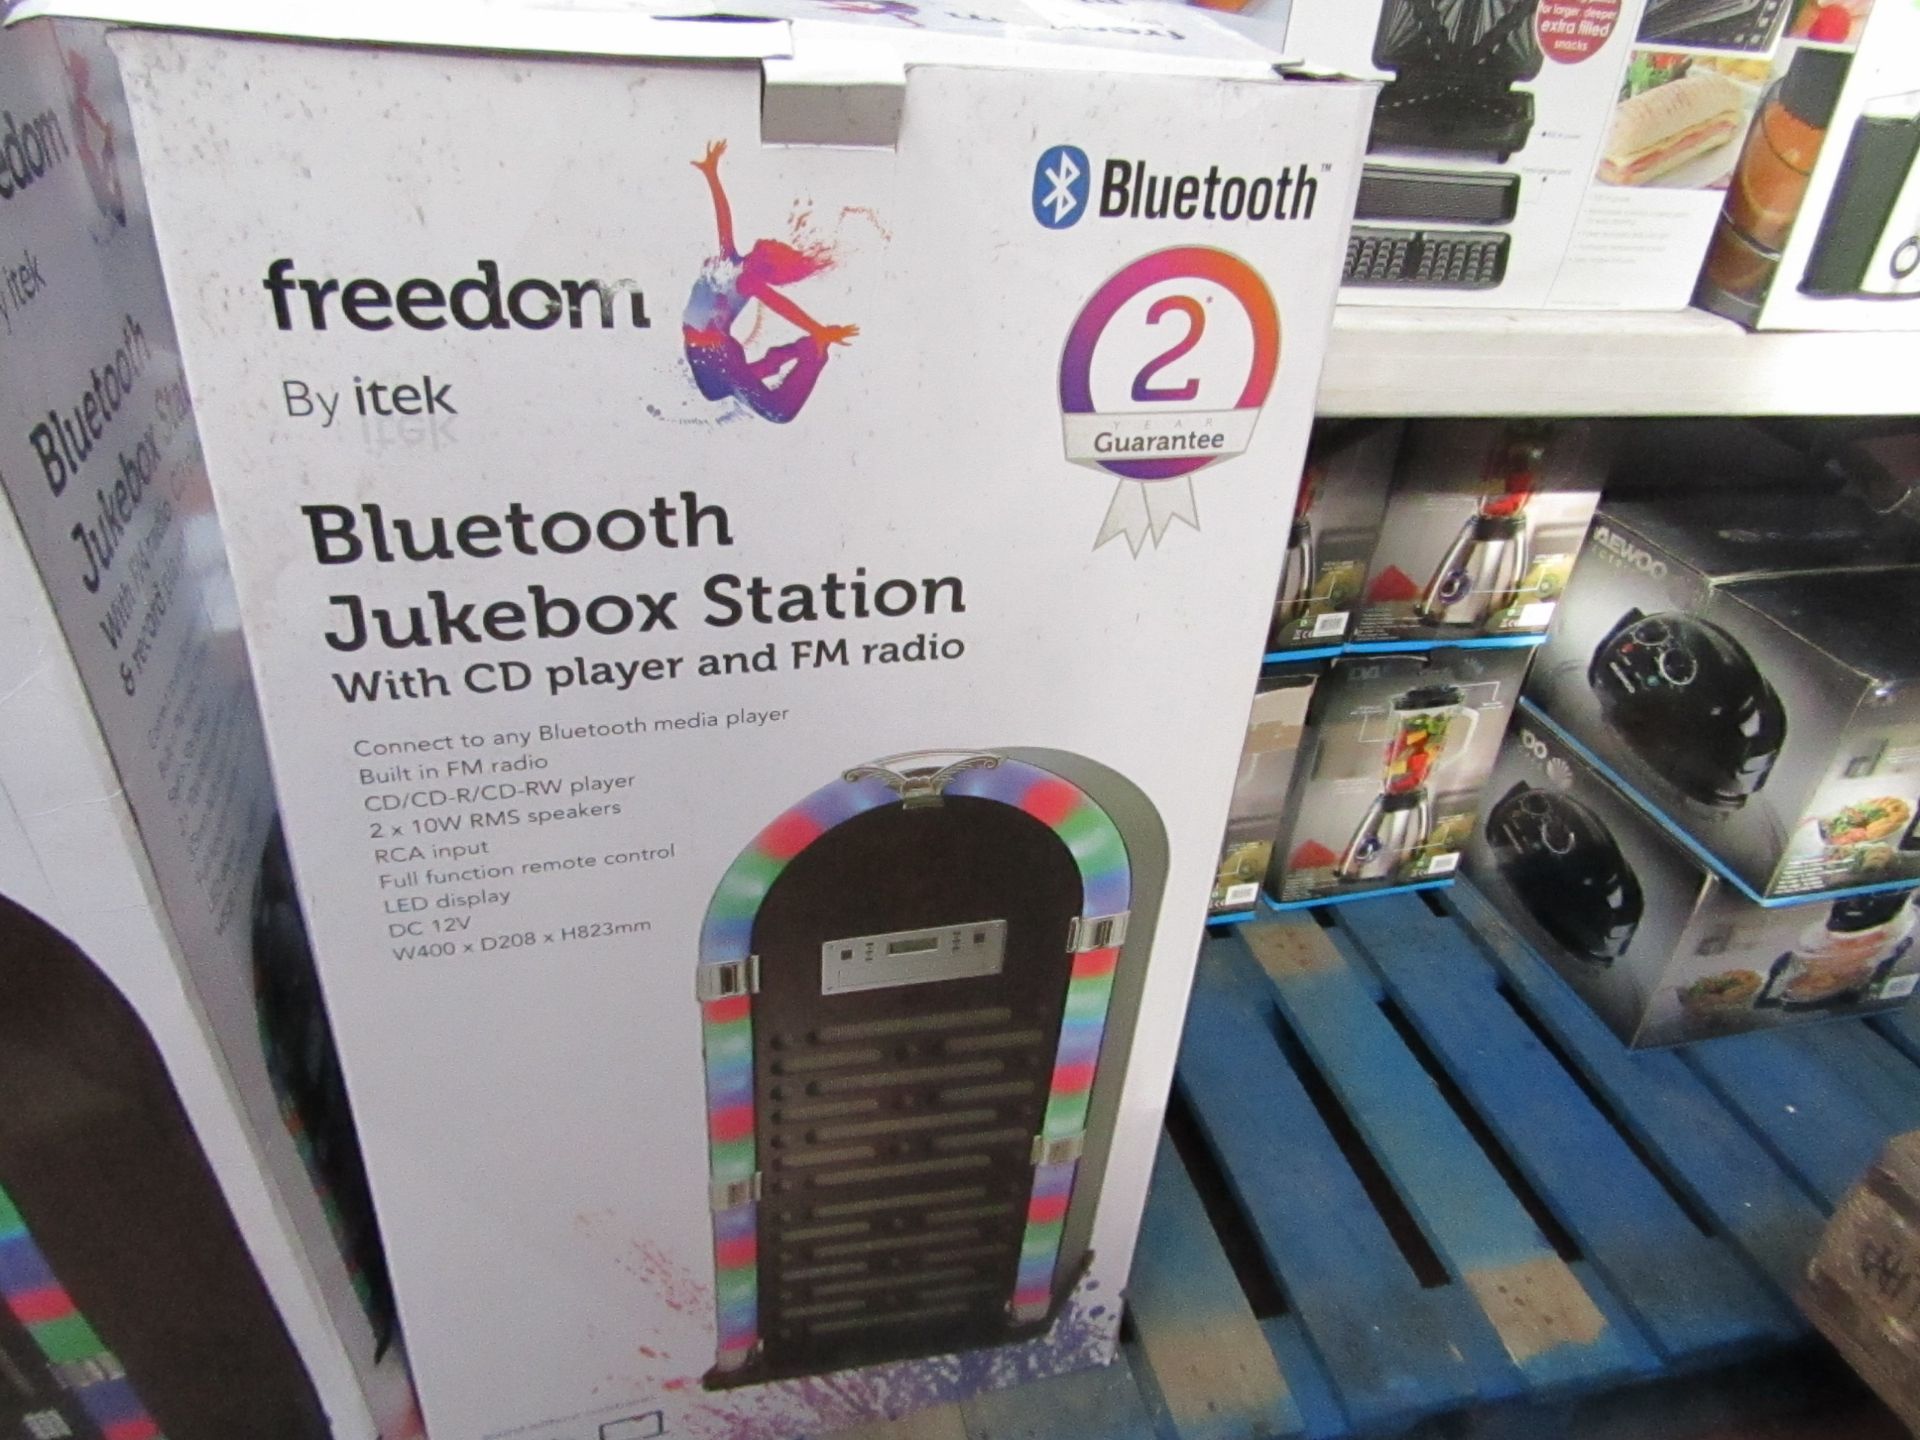 Freedom bluetooth jukebox station boxed